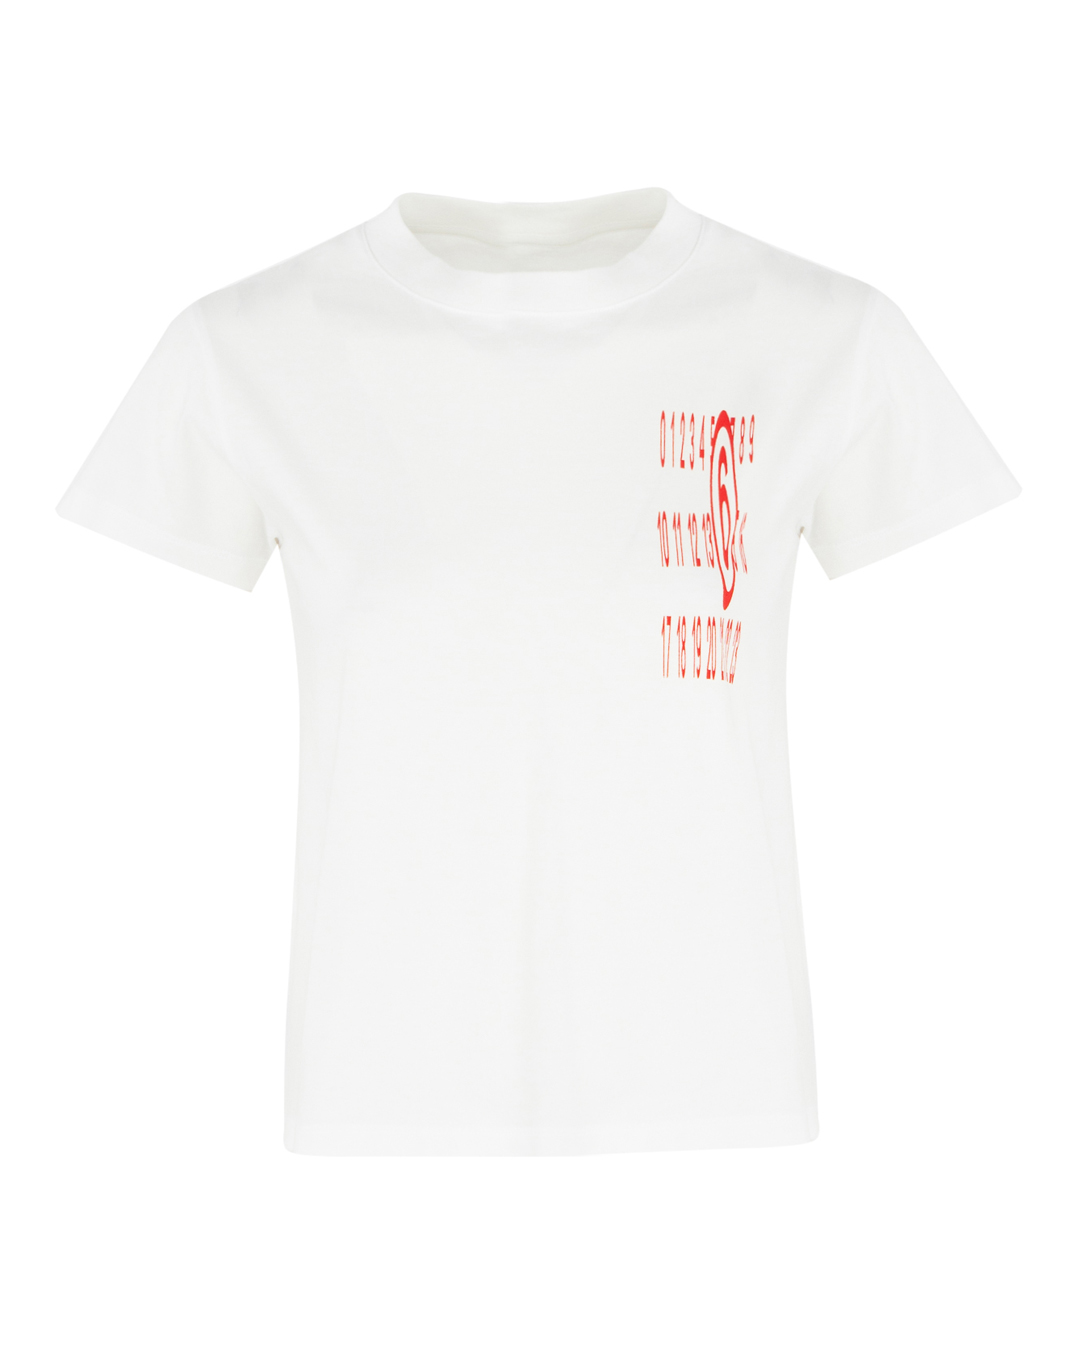 футболка MM6 Maison Margiela S62GD0185 белый+принт m, размер m, цвет белый+принт S62GD0185 белый+принт m - фото 1